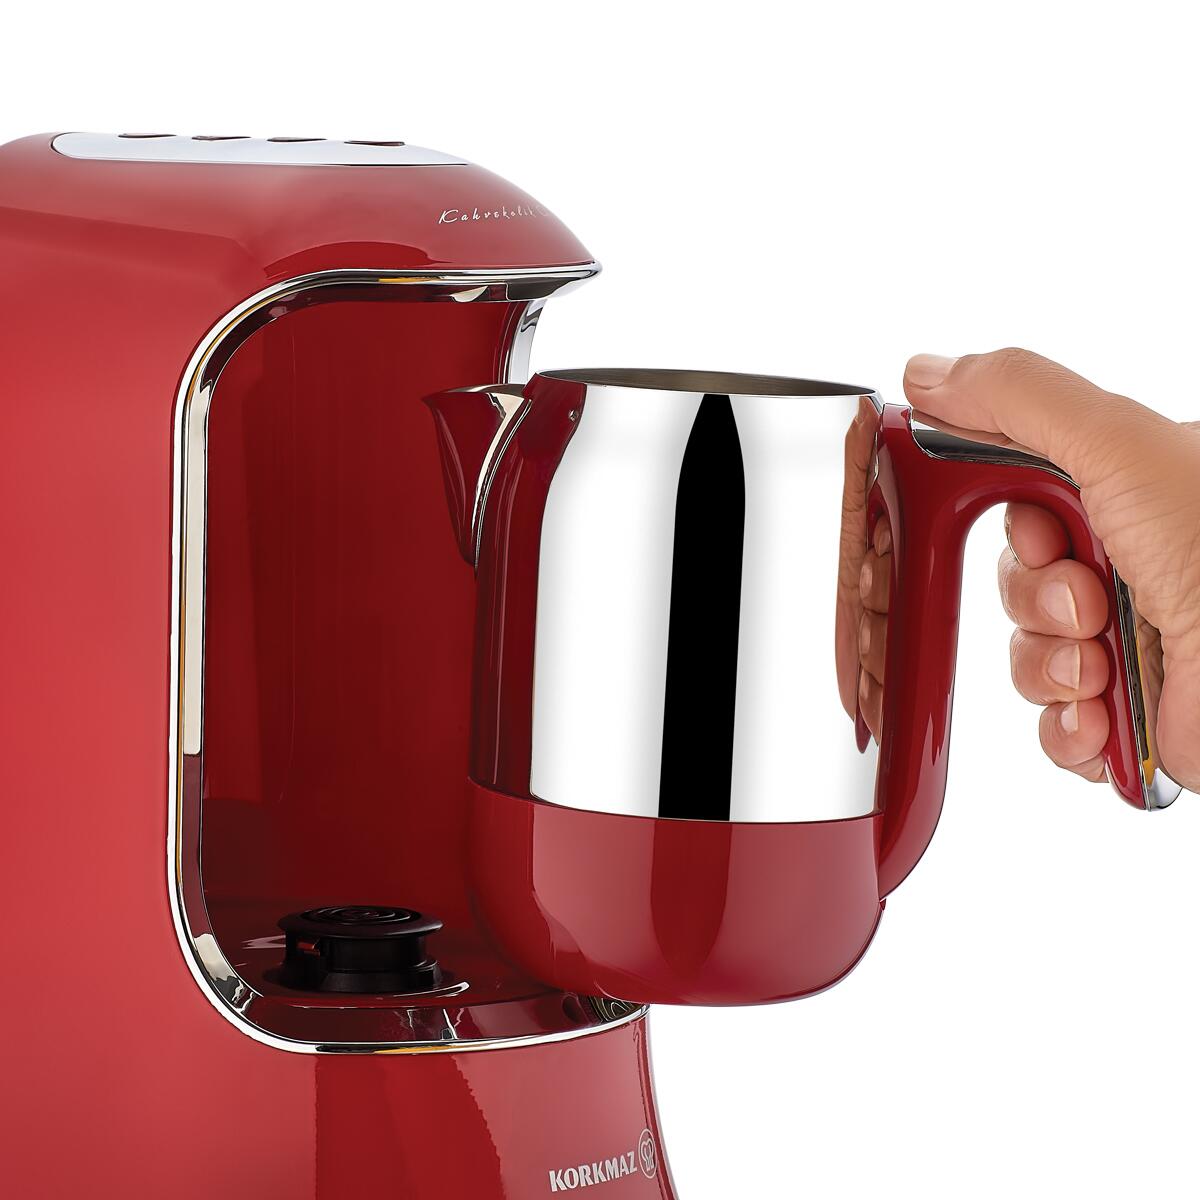 Korkmaz Kahvekolik Aqua Kırmızı/Krom Otomatik Kahve Makinesi - 4